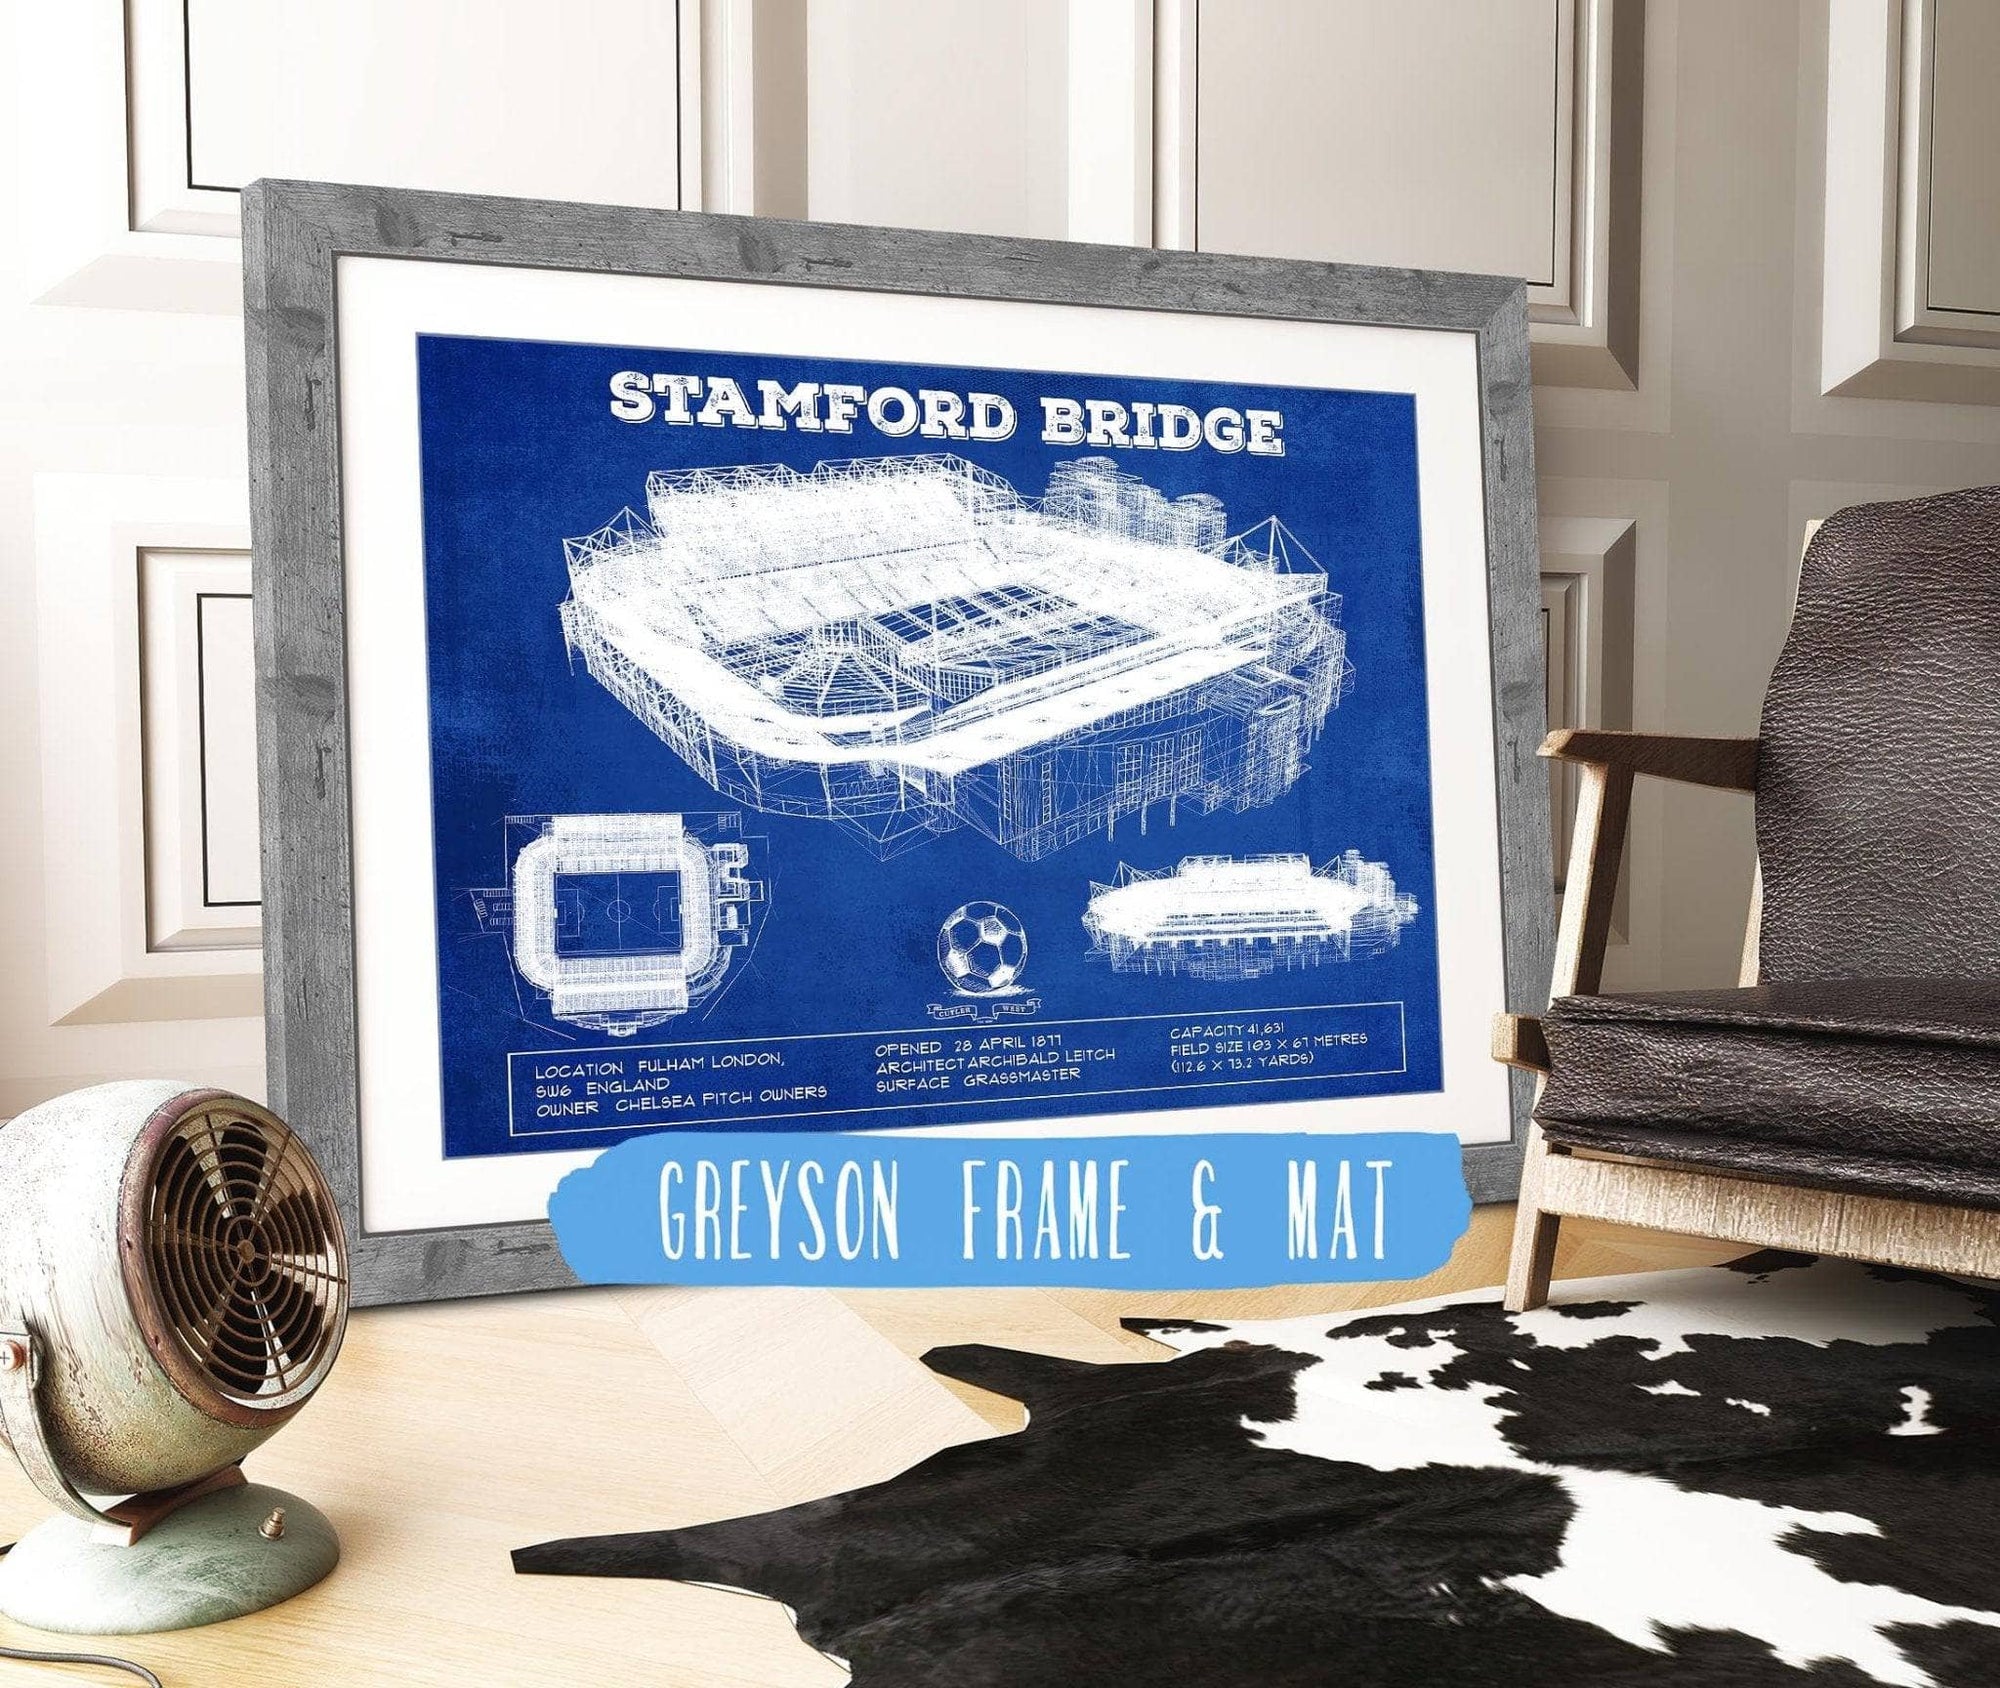 Cutler West Soccer Collection 14" x 11" / Greyson Frame & Mat Stamford Bridge - Chelsea FC European Football Soccer Stadium Print 700225520-TOP